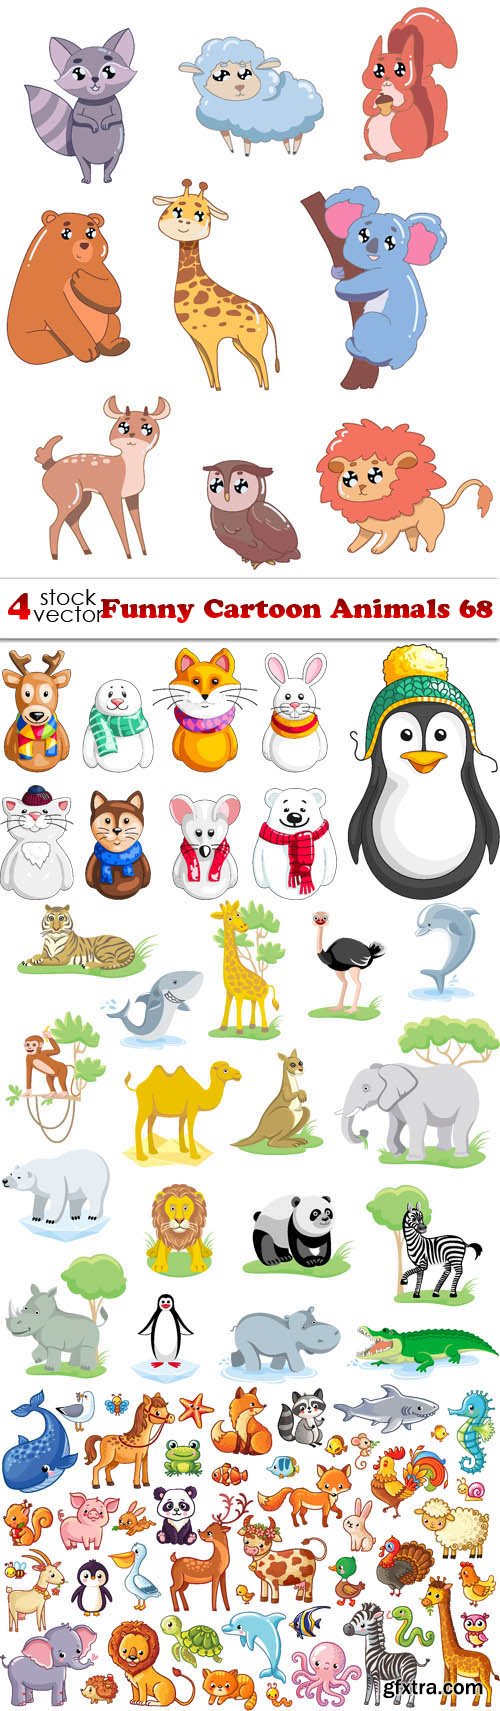 Vectors - Funny Cartoon Animals 68 » GFxtra